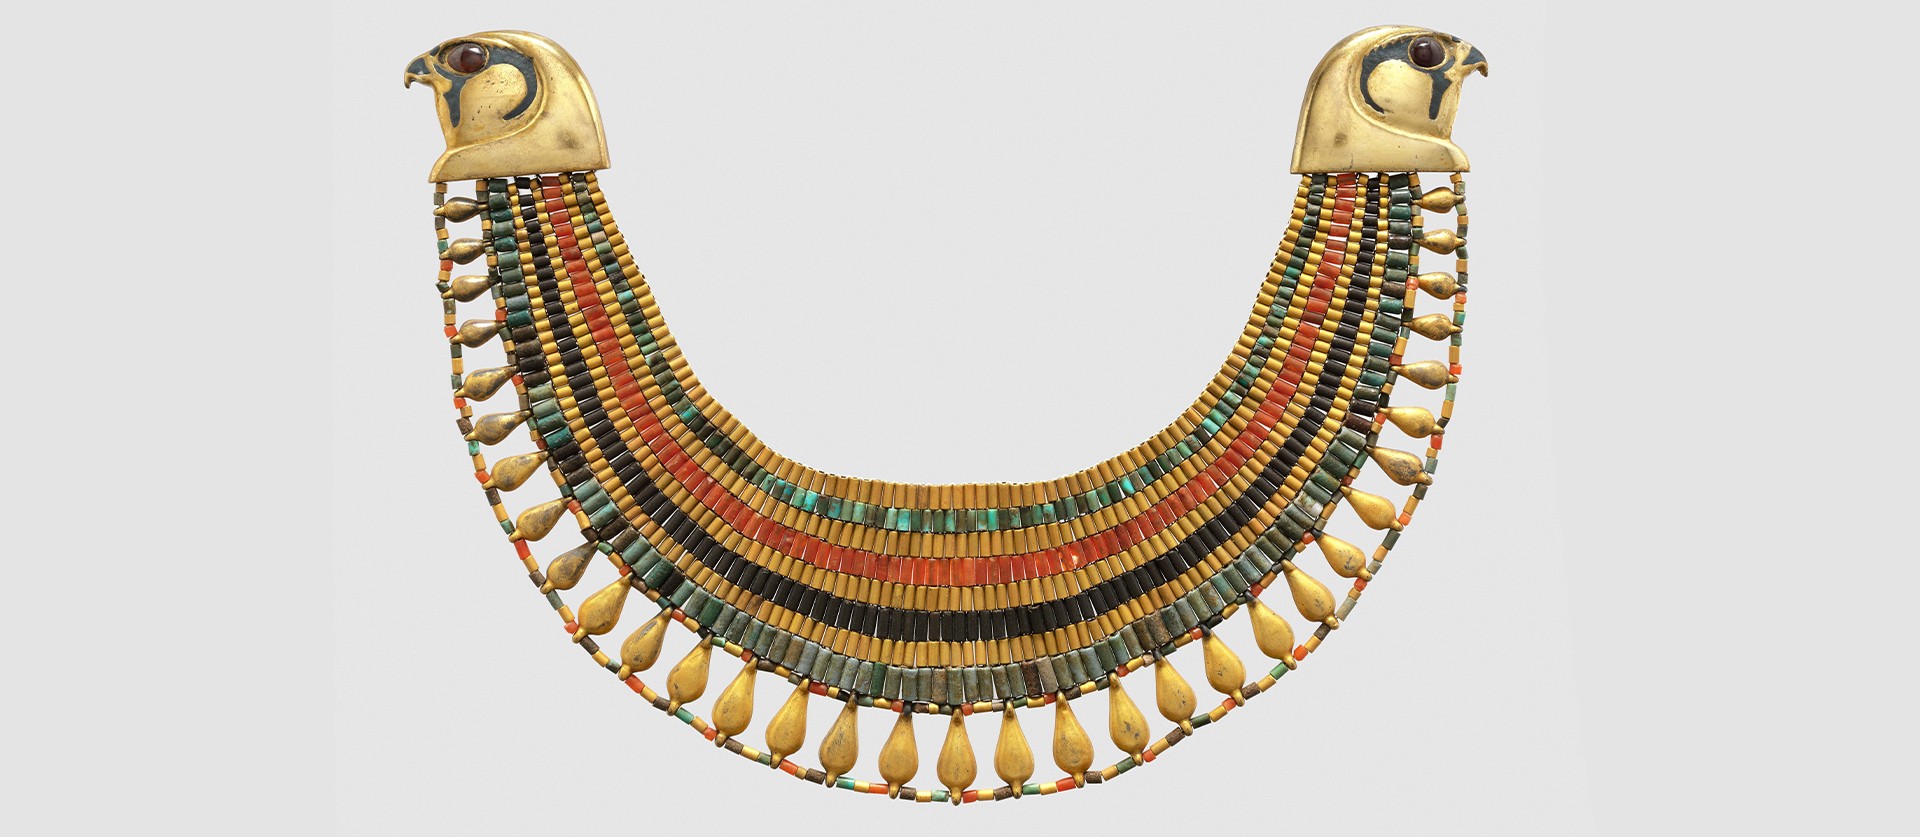 gioielli egizi, I gioielli egizi: storia, significato e arte nei monili dei Faraoni